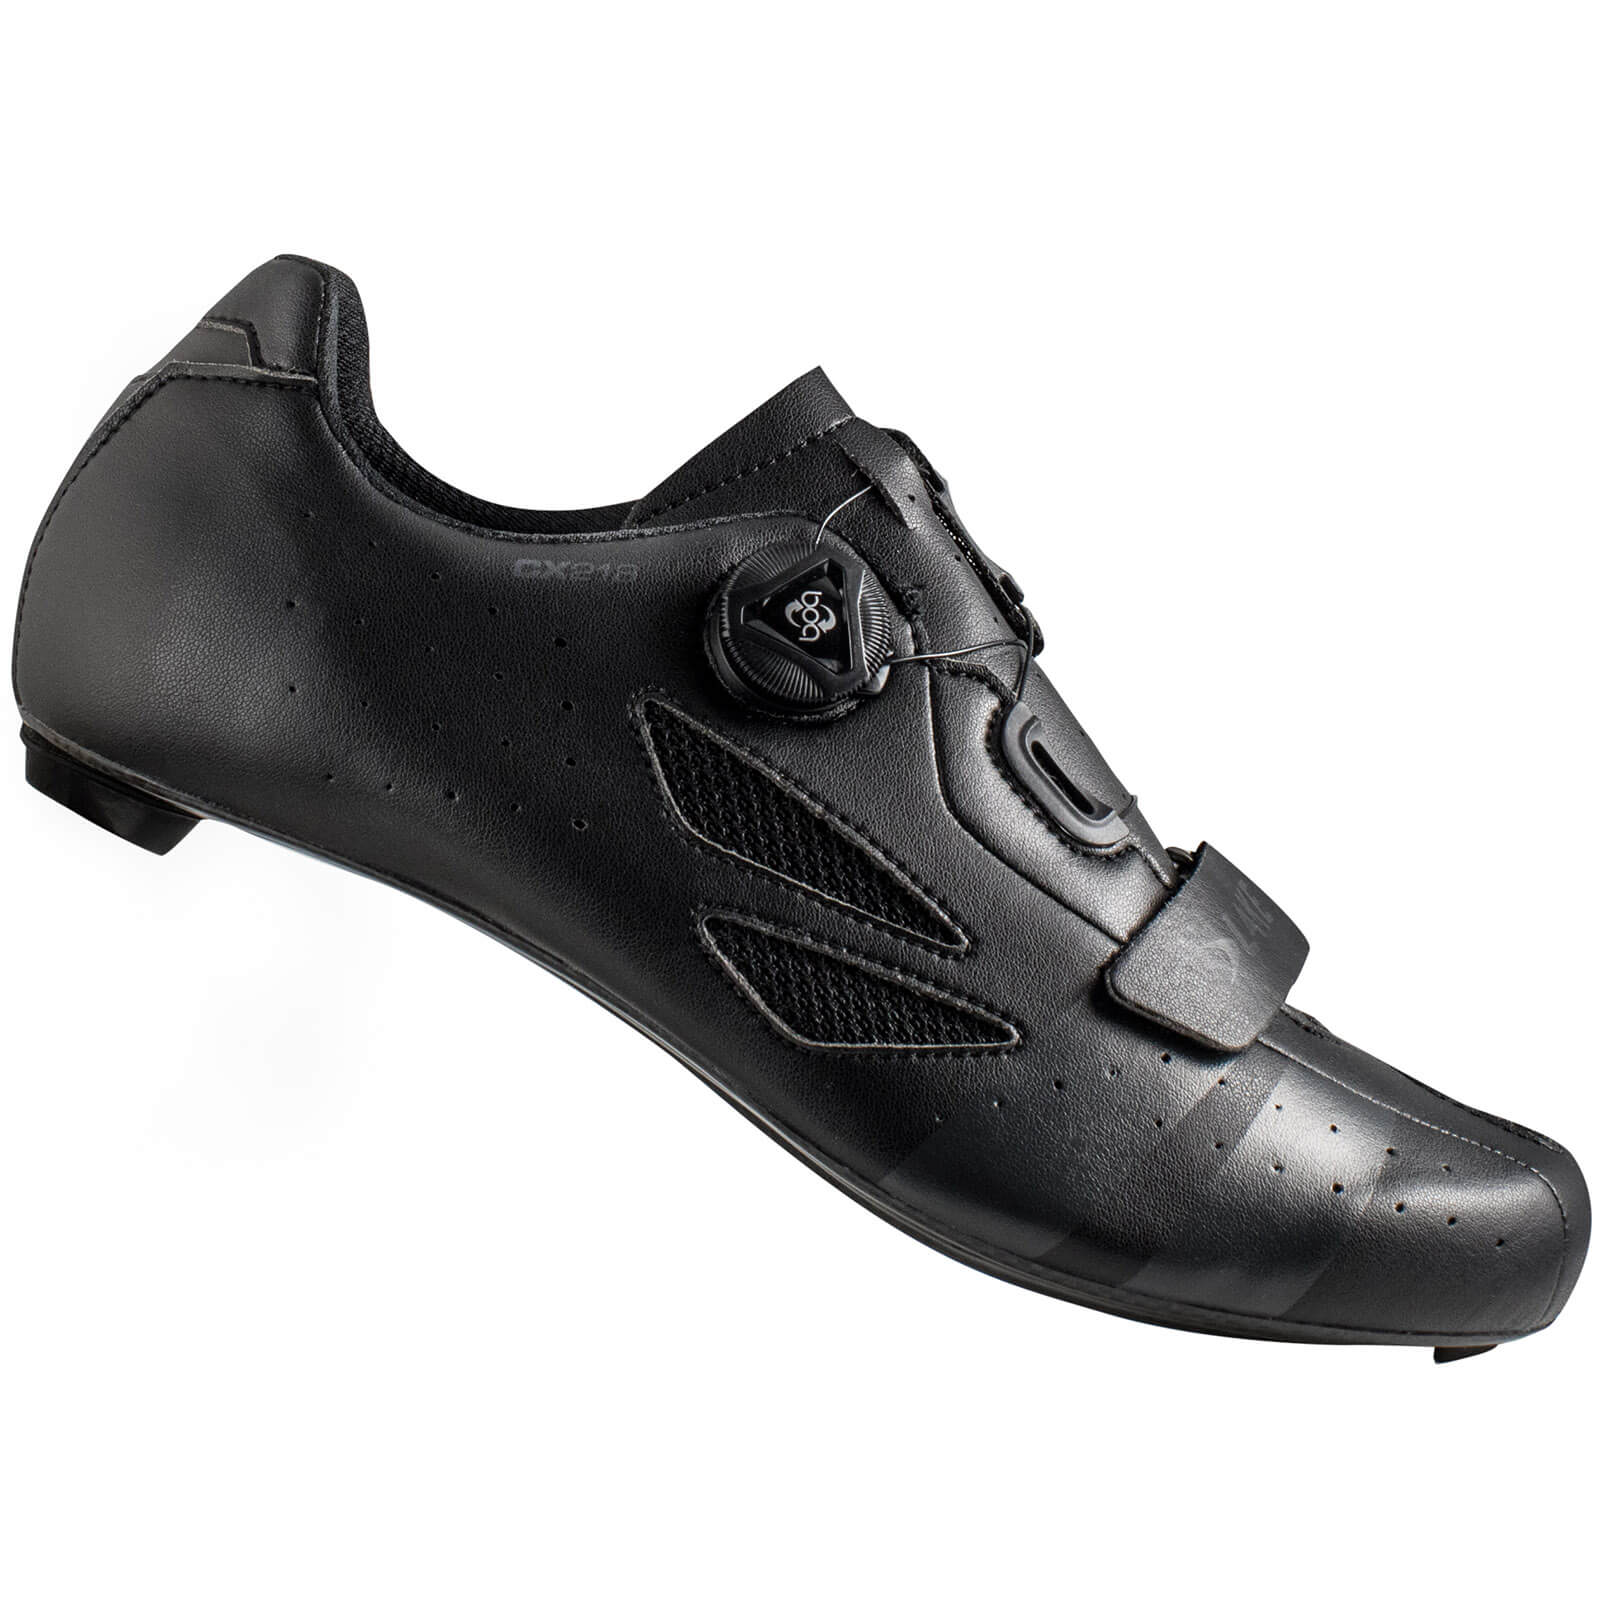 Lake CX218 Carbon Wide Fit Road Shoes - Black/Grey - EU 42